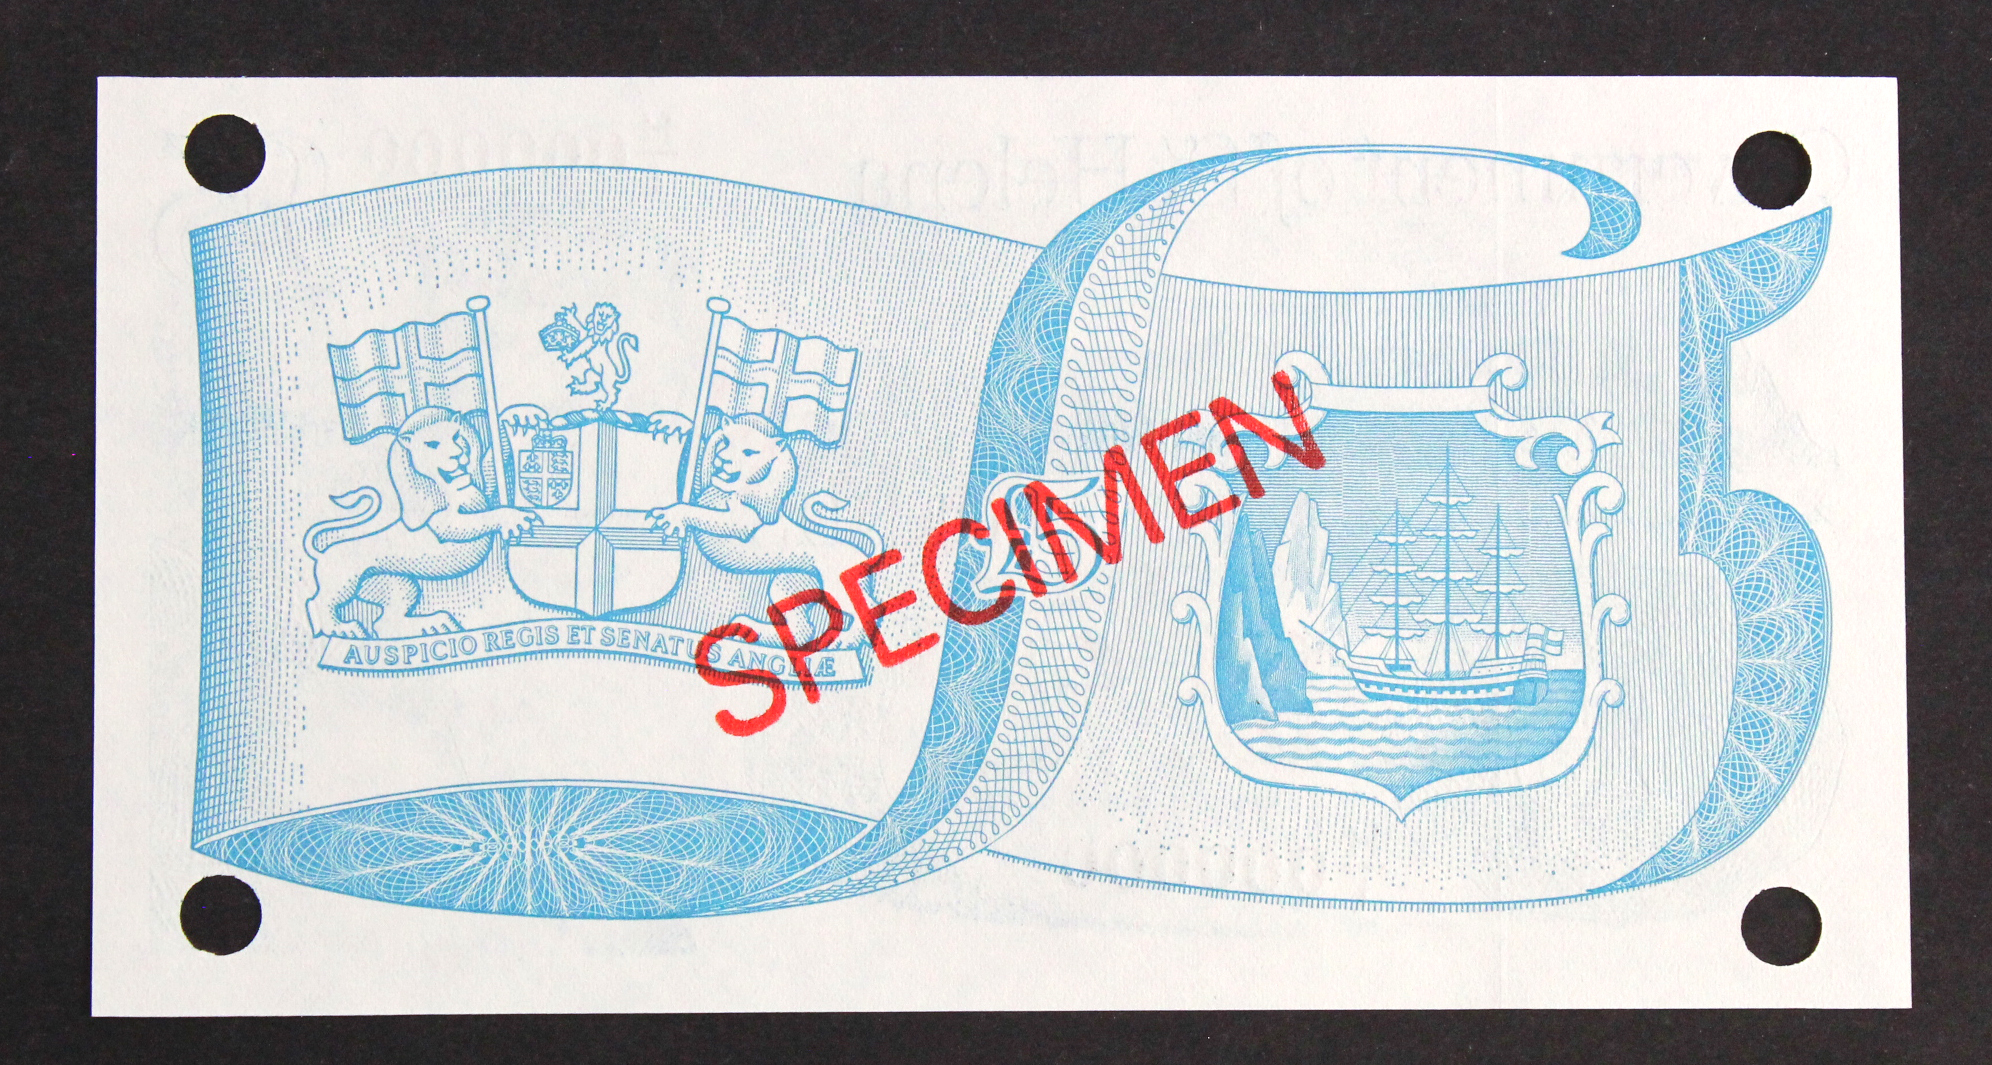 St. Helena 5 Pounds issued 1998, SPECIMEN note serial H/1 000000, diagonal overprint 'specimen' in - Image 2 of 2